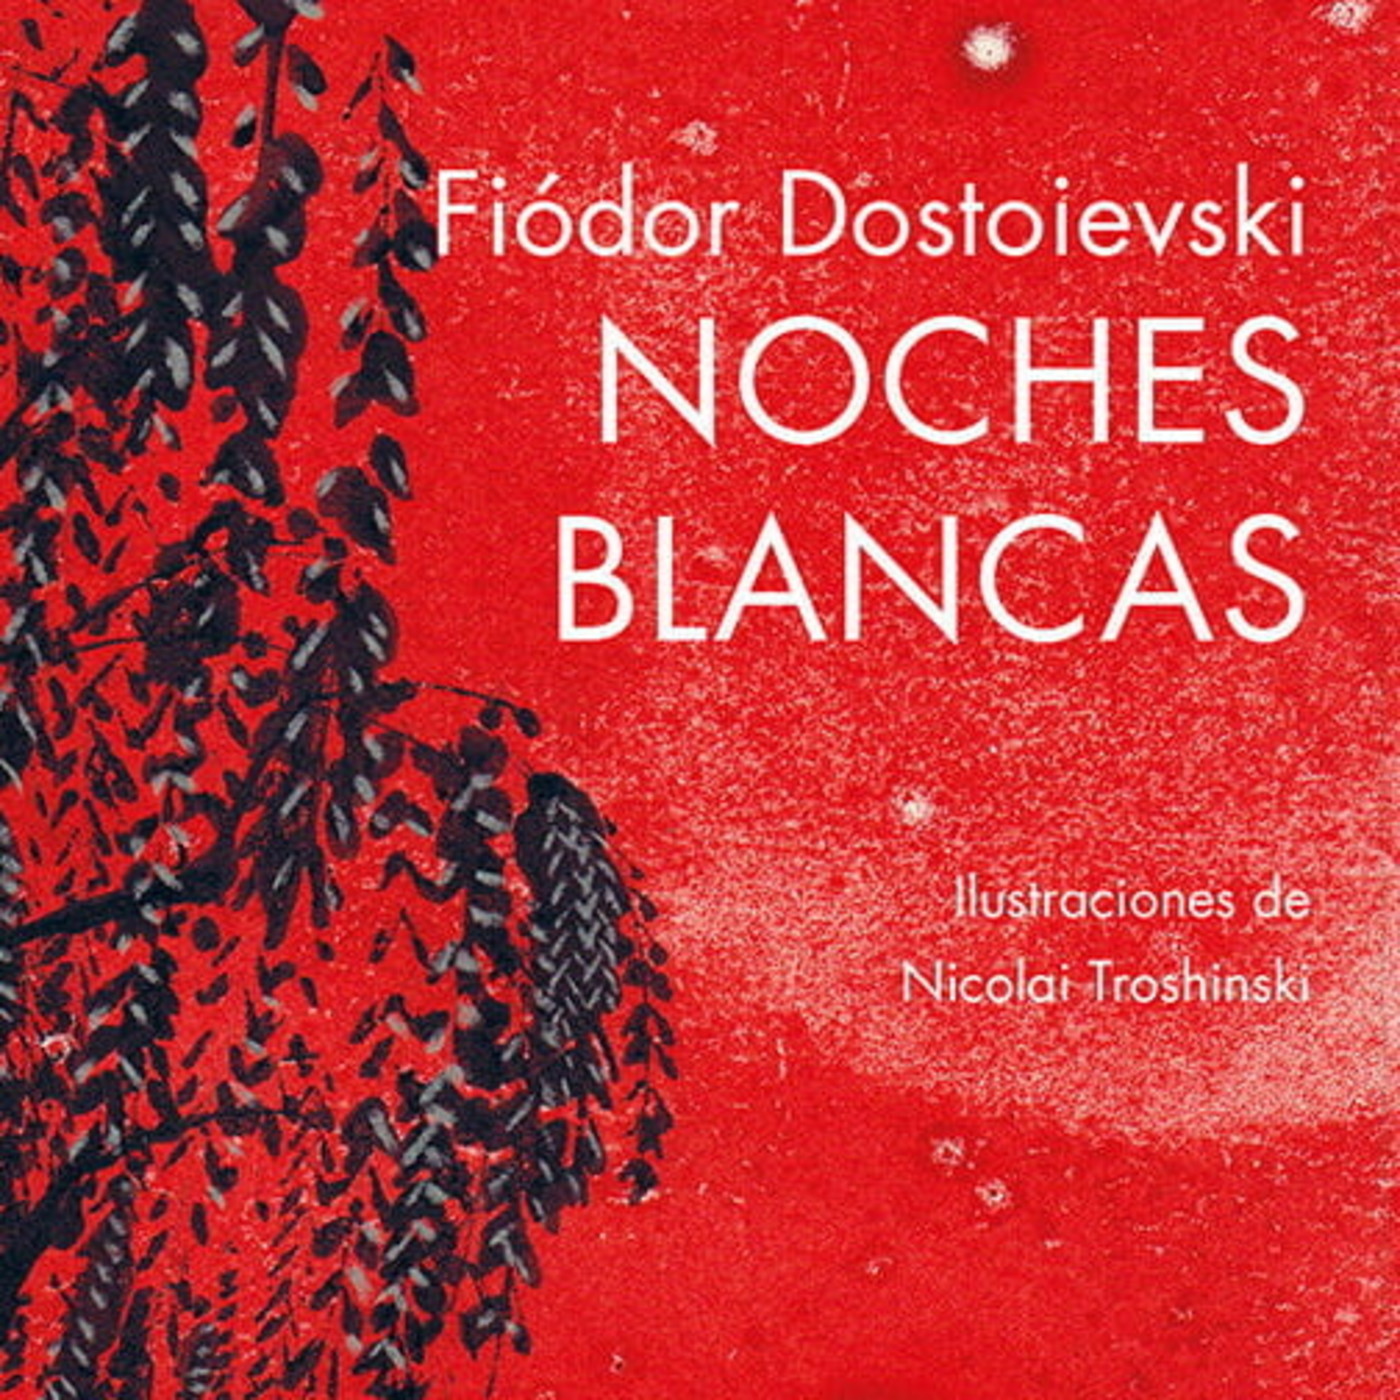 Noches blancas, de Fedor Dostoyevski | Audiolibros en castellano